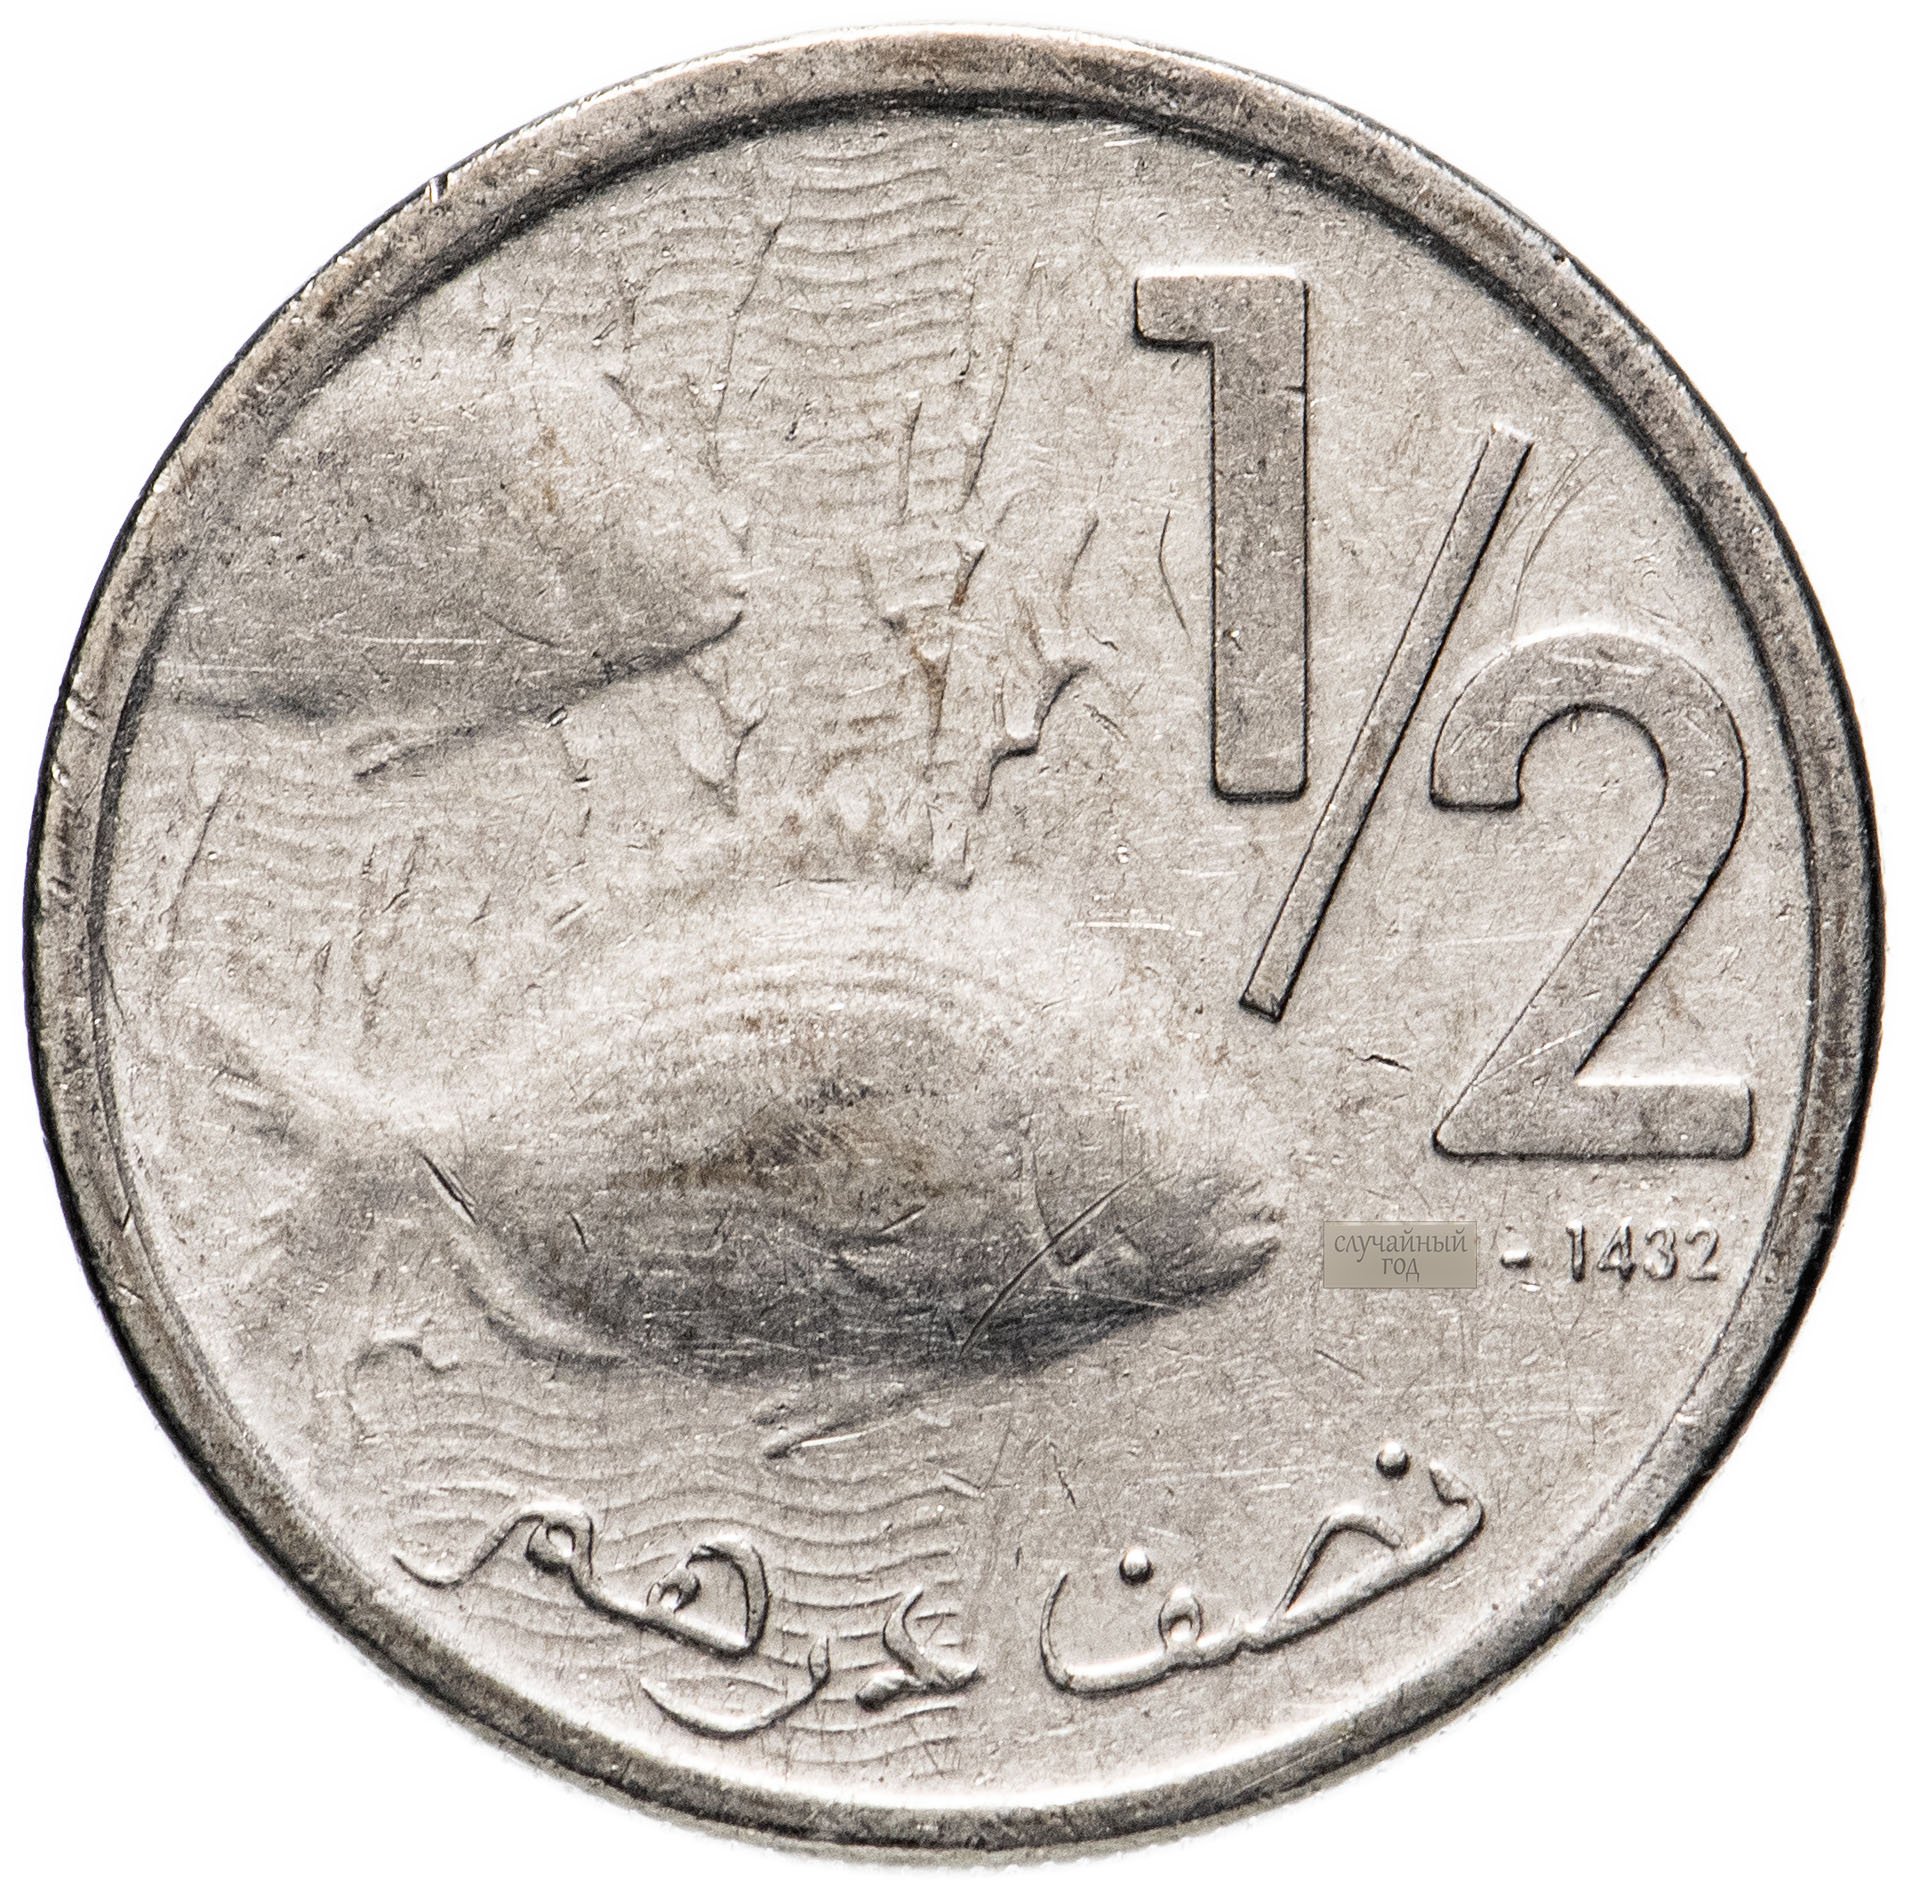 12000 дирхам. 1/2 Дирхама Марокко. 2 Дирхама монета. Монеты Марокко. Монета 2011-1432.